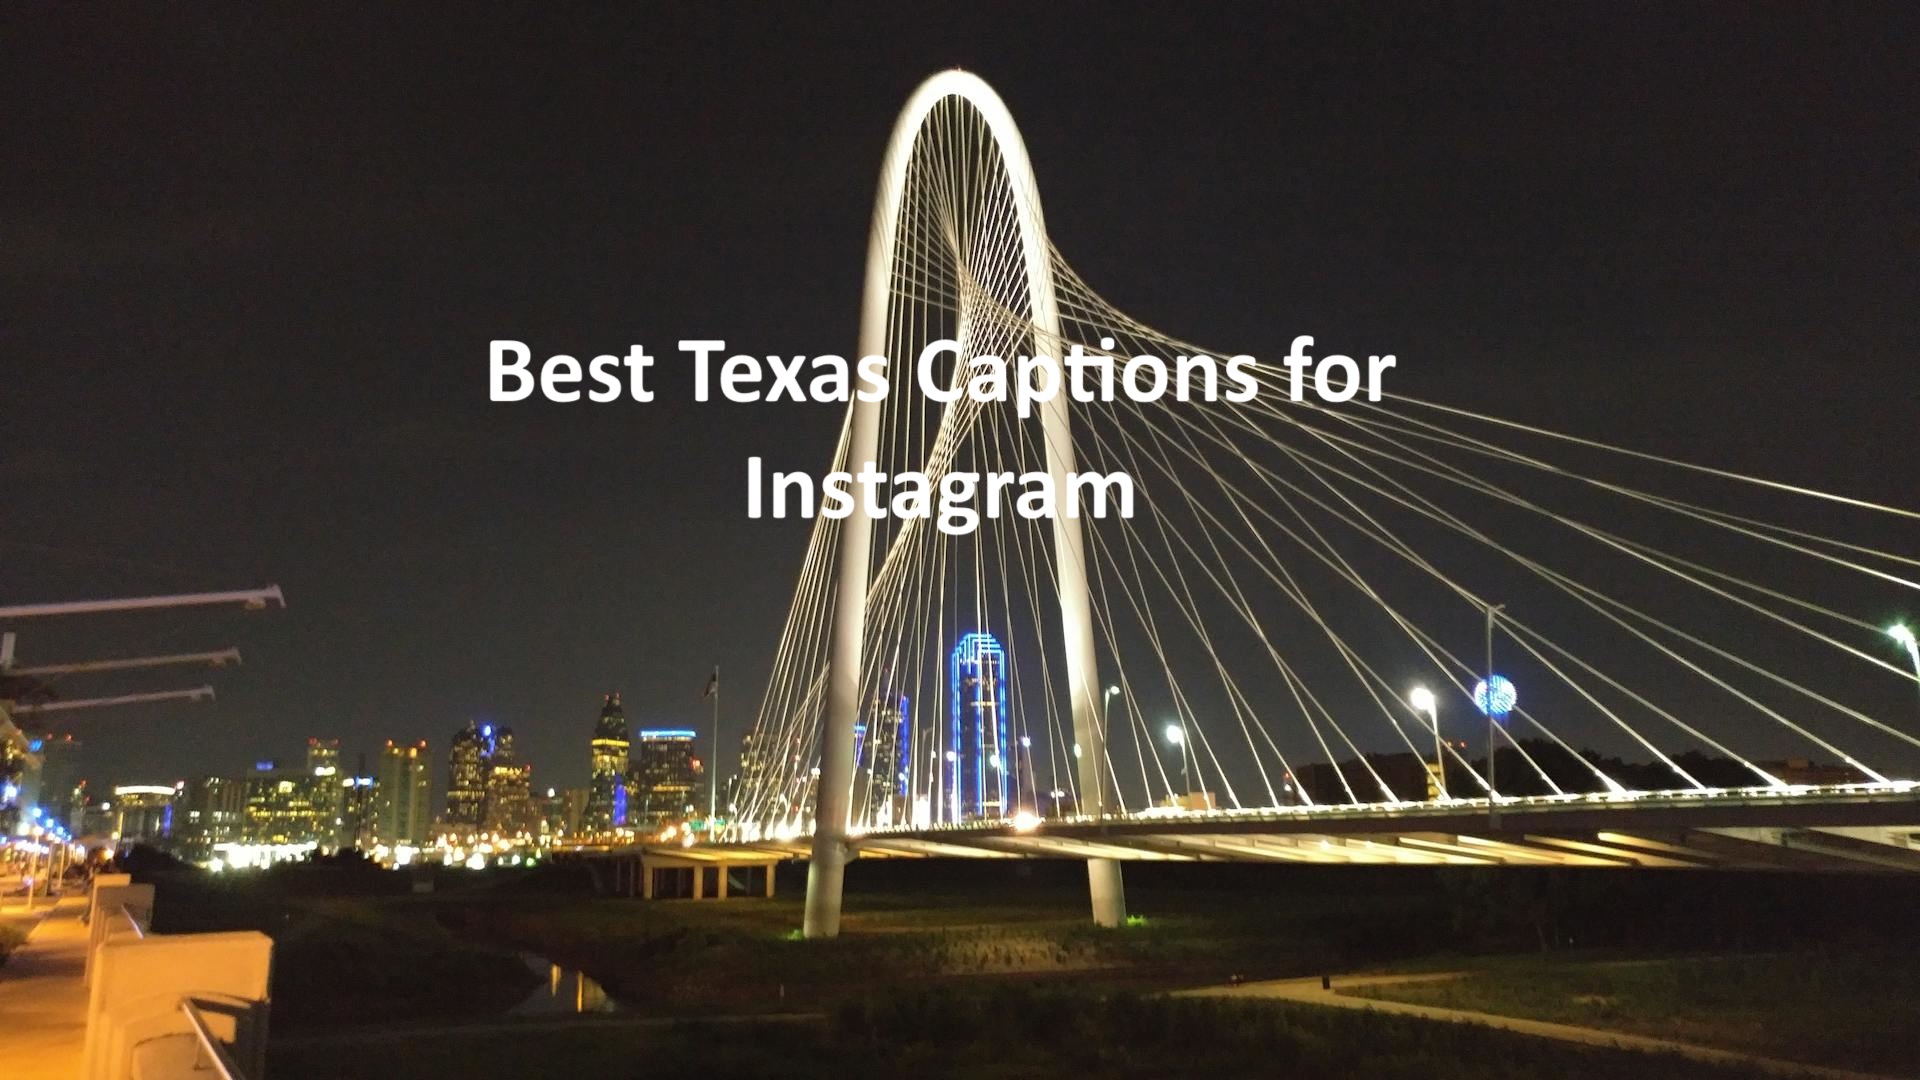 Texas Captions for Instagram